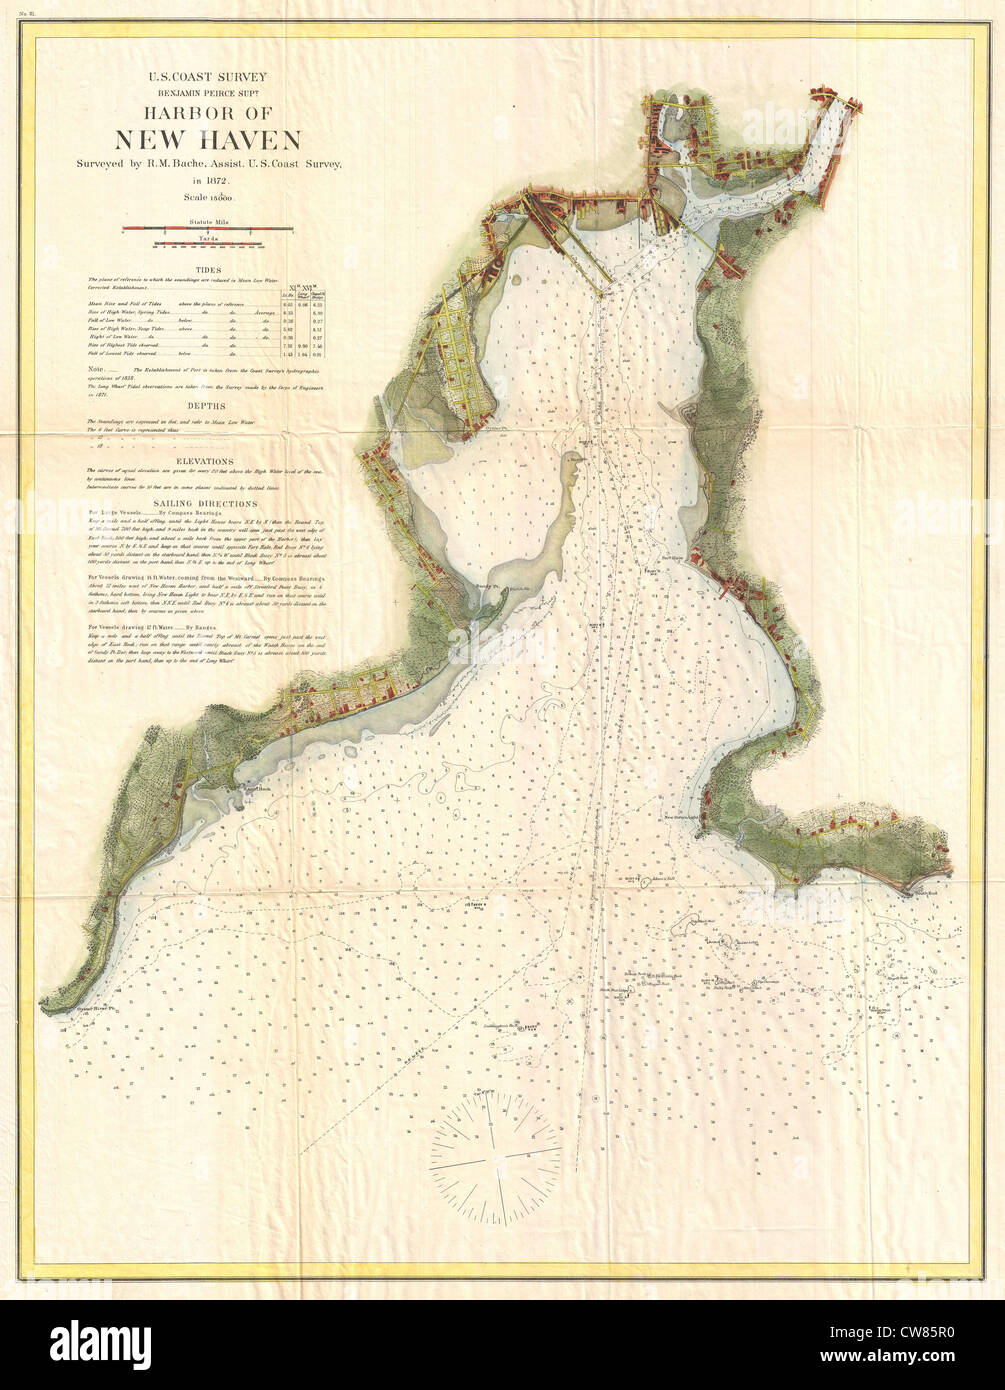 1872 US Coast Survey Karte von New Haven, Connecticut Stockfoto